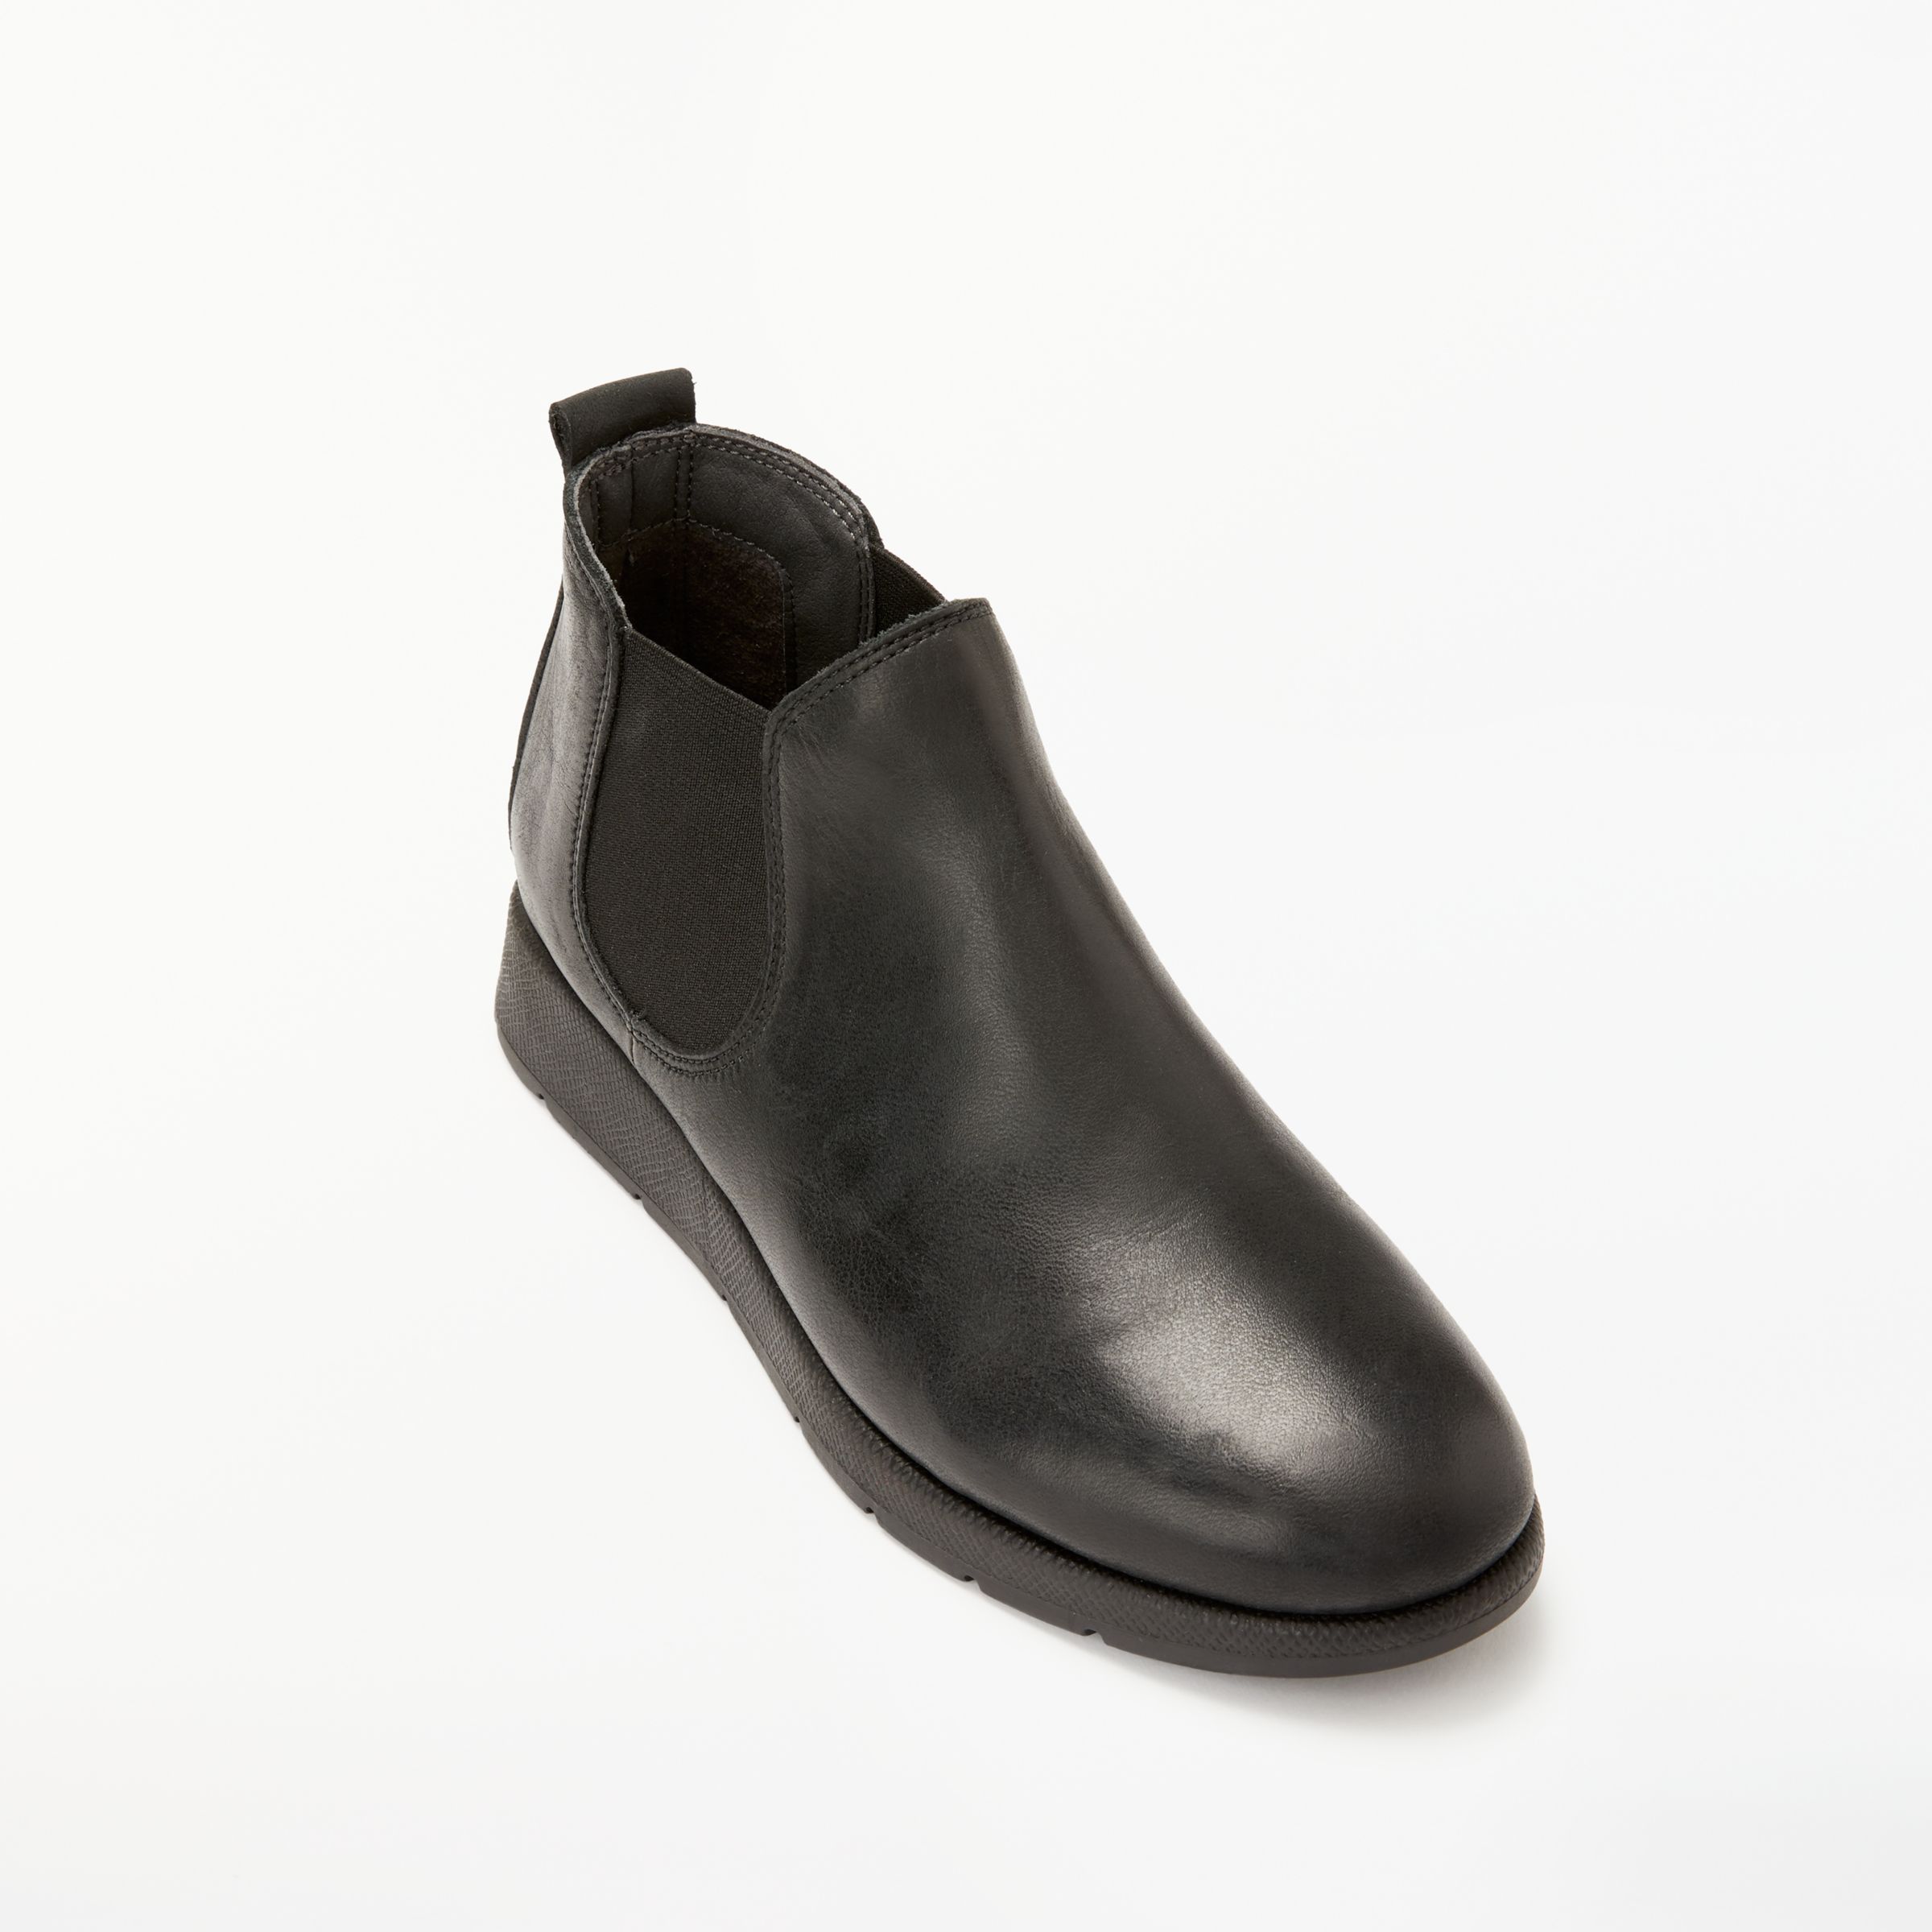 John Lewis & Partners Designed for Comfort Yasmin Chelsea Boots